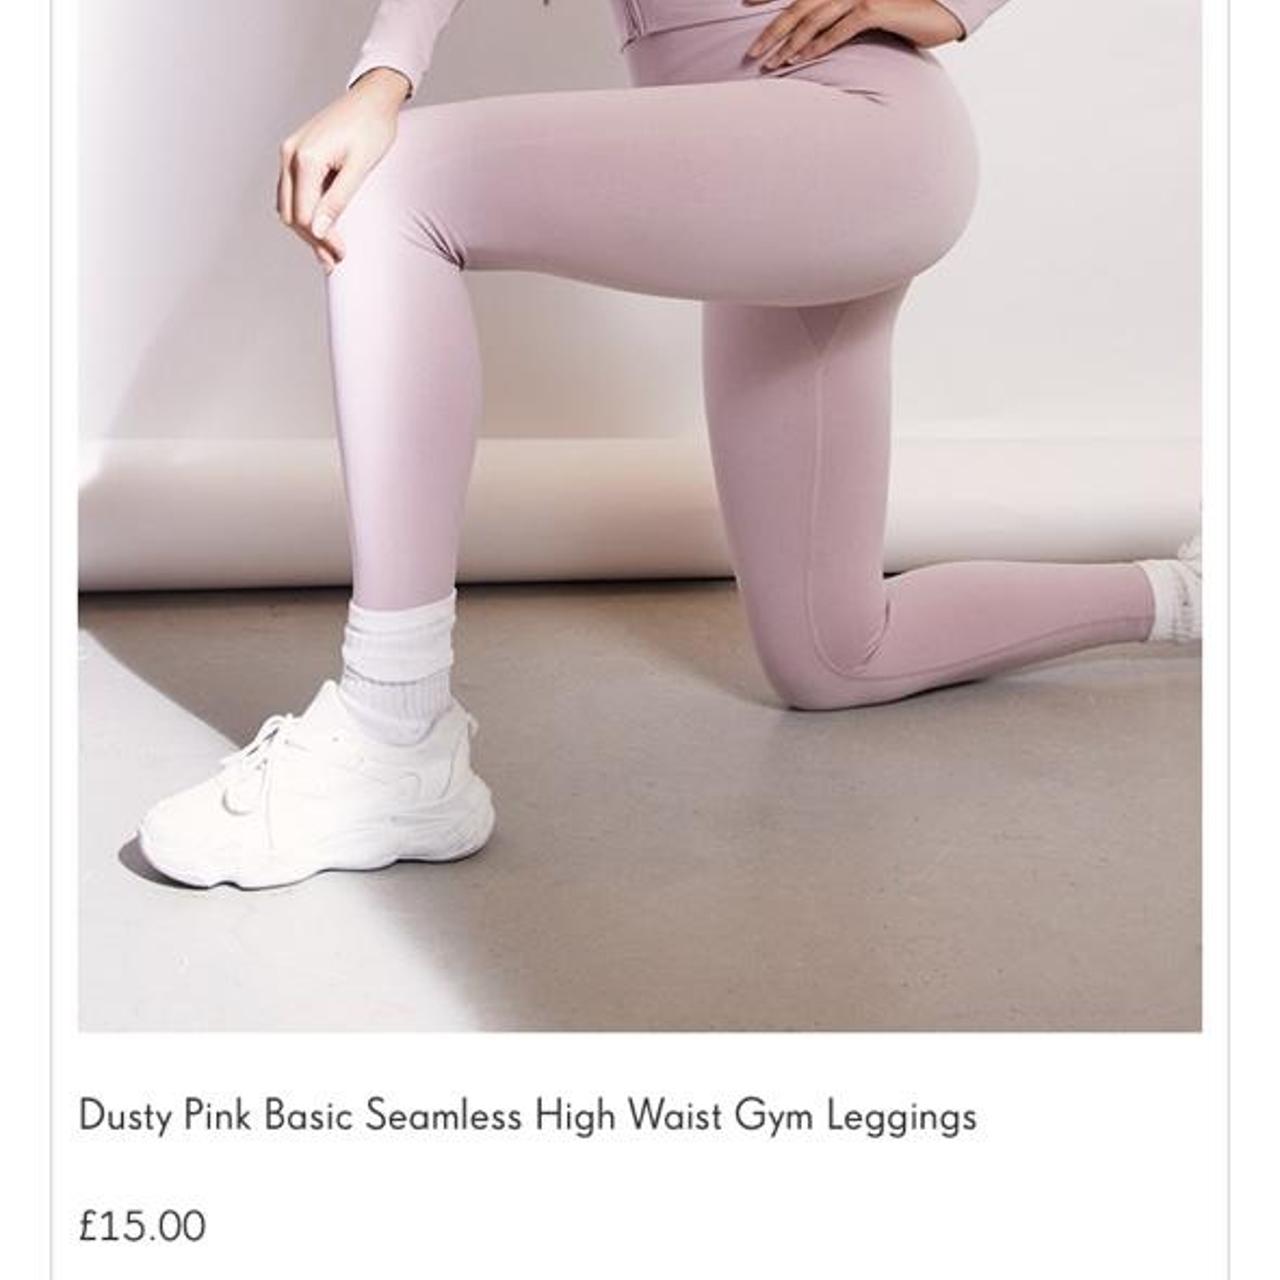 Dusty Pink Basic Seamless High Waist Gym Leggings